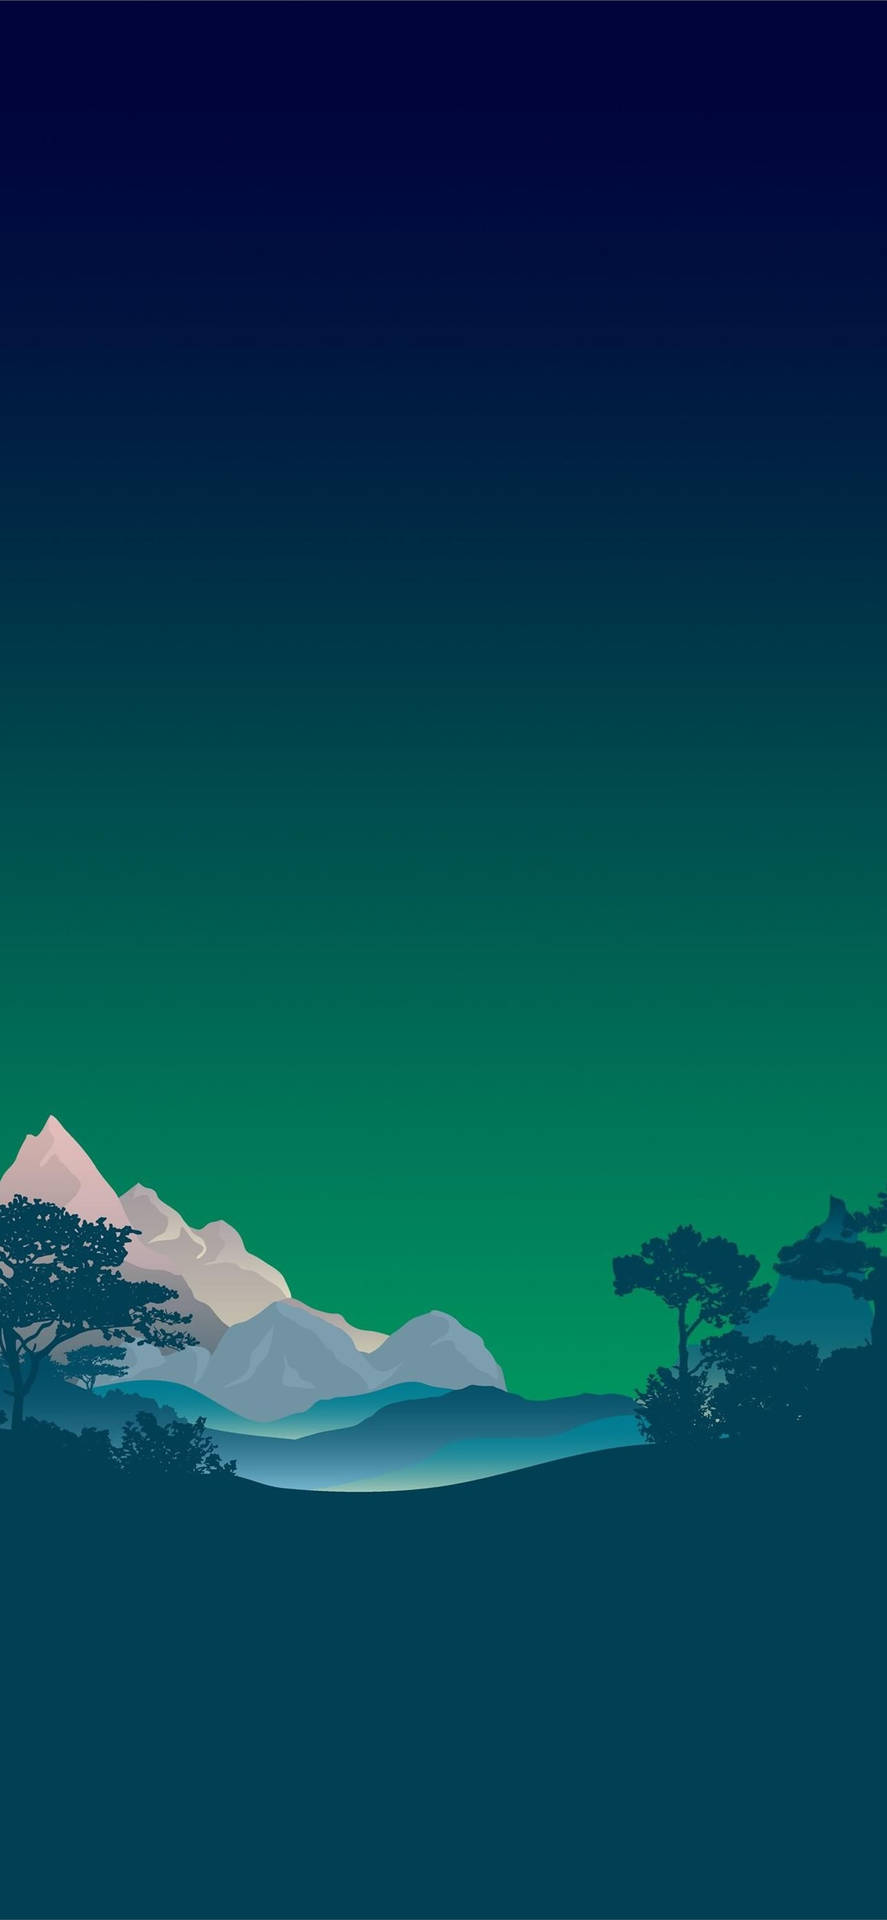 Caption: Stunning Snowy Mountain Green Iphone Wallpaper